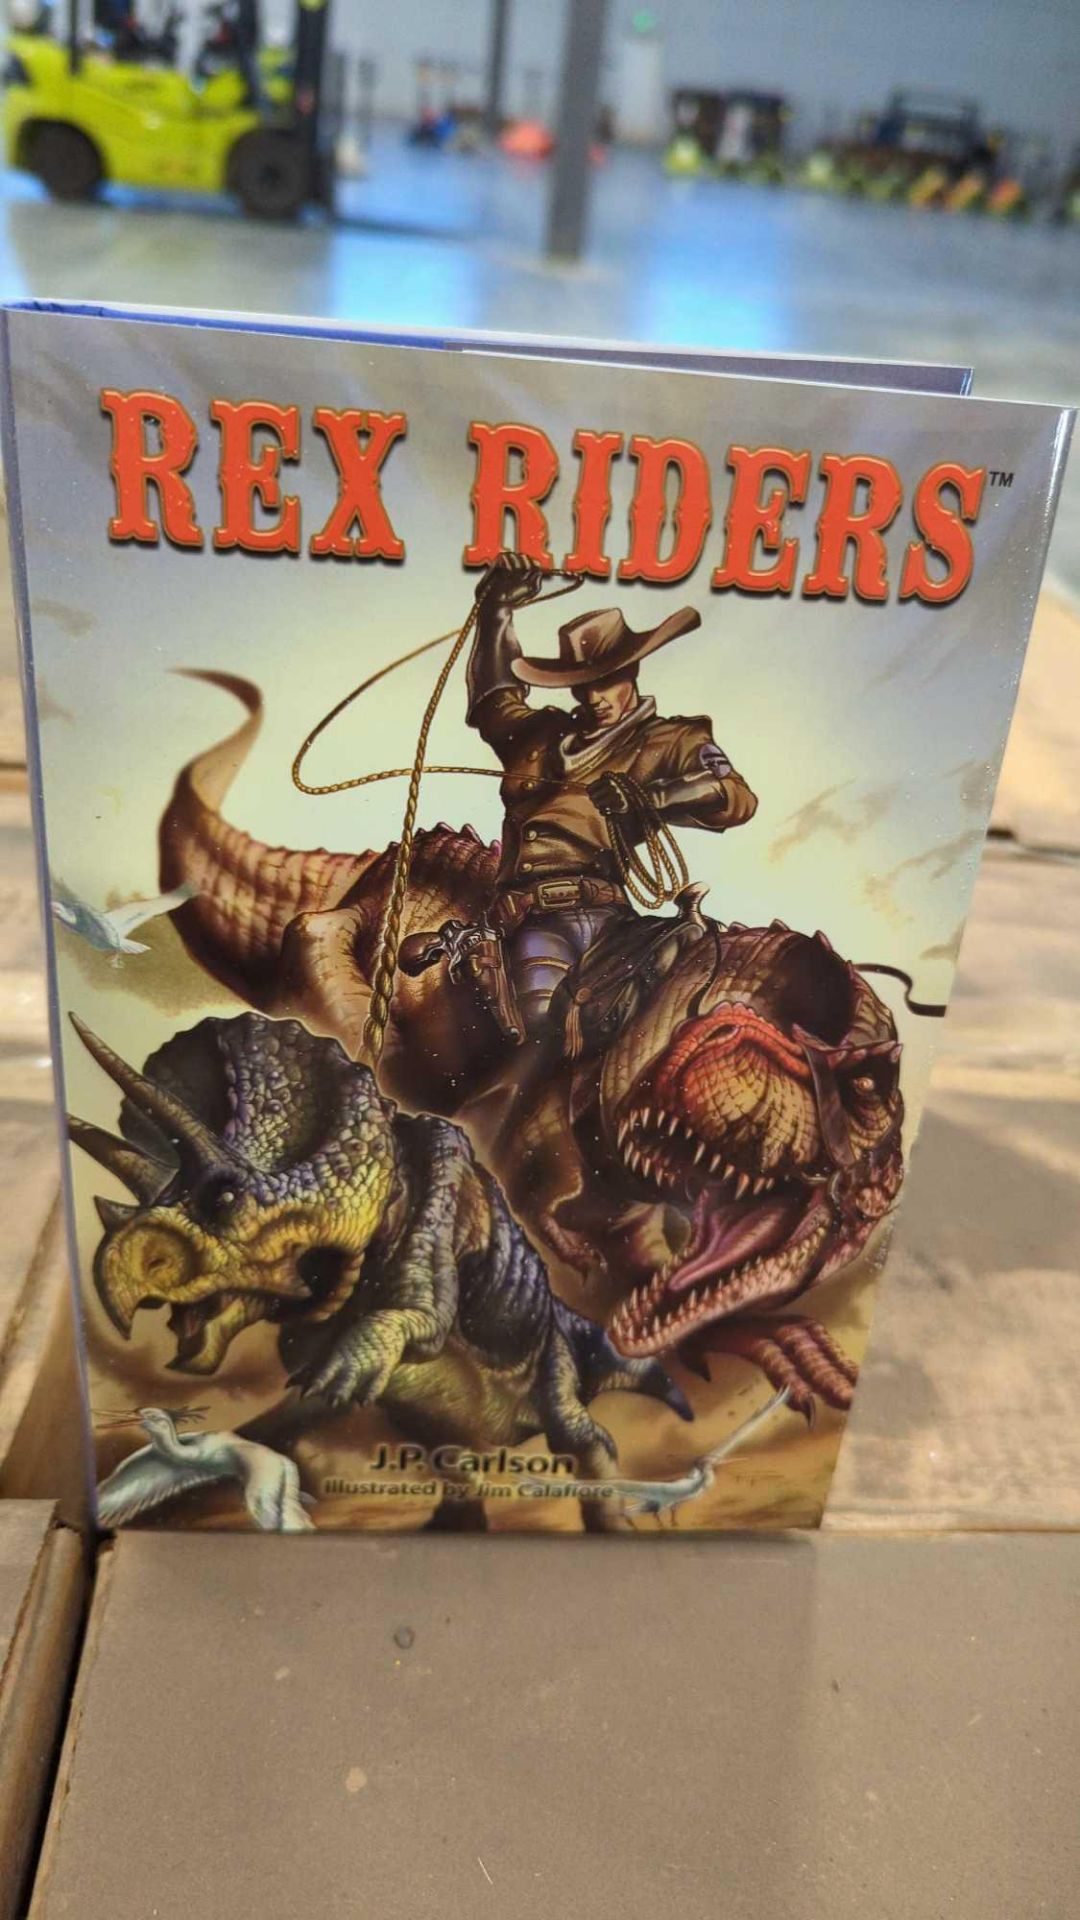 rex riders books - Image 3 of 7